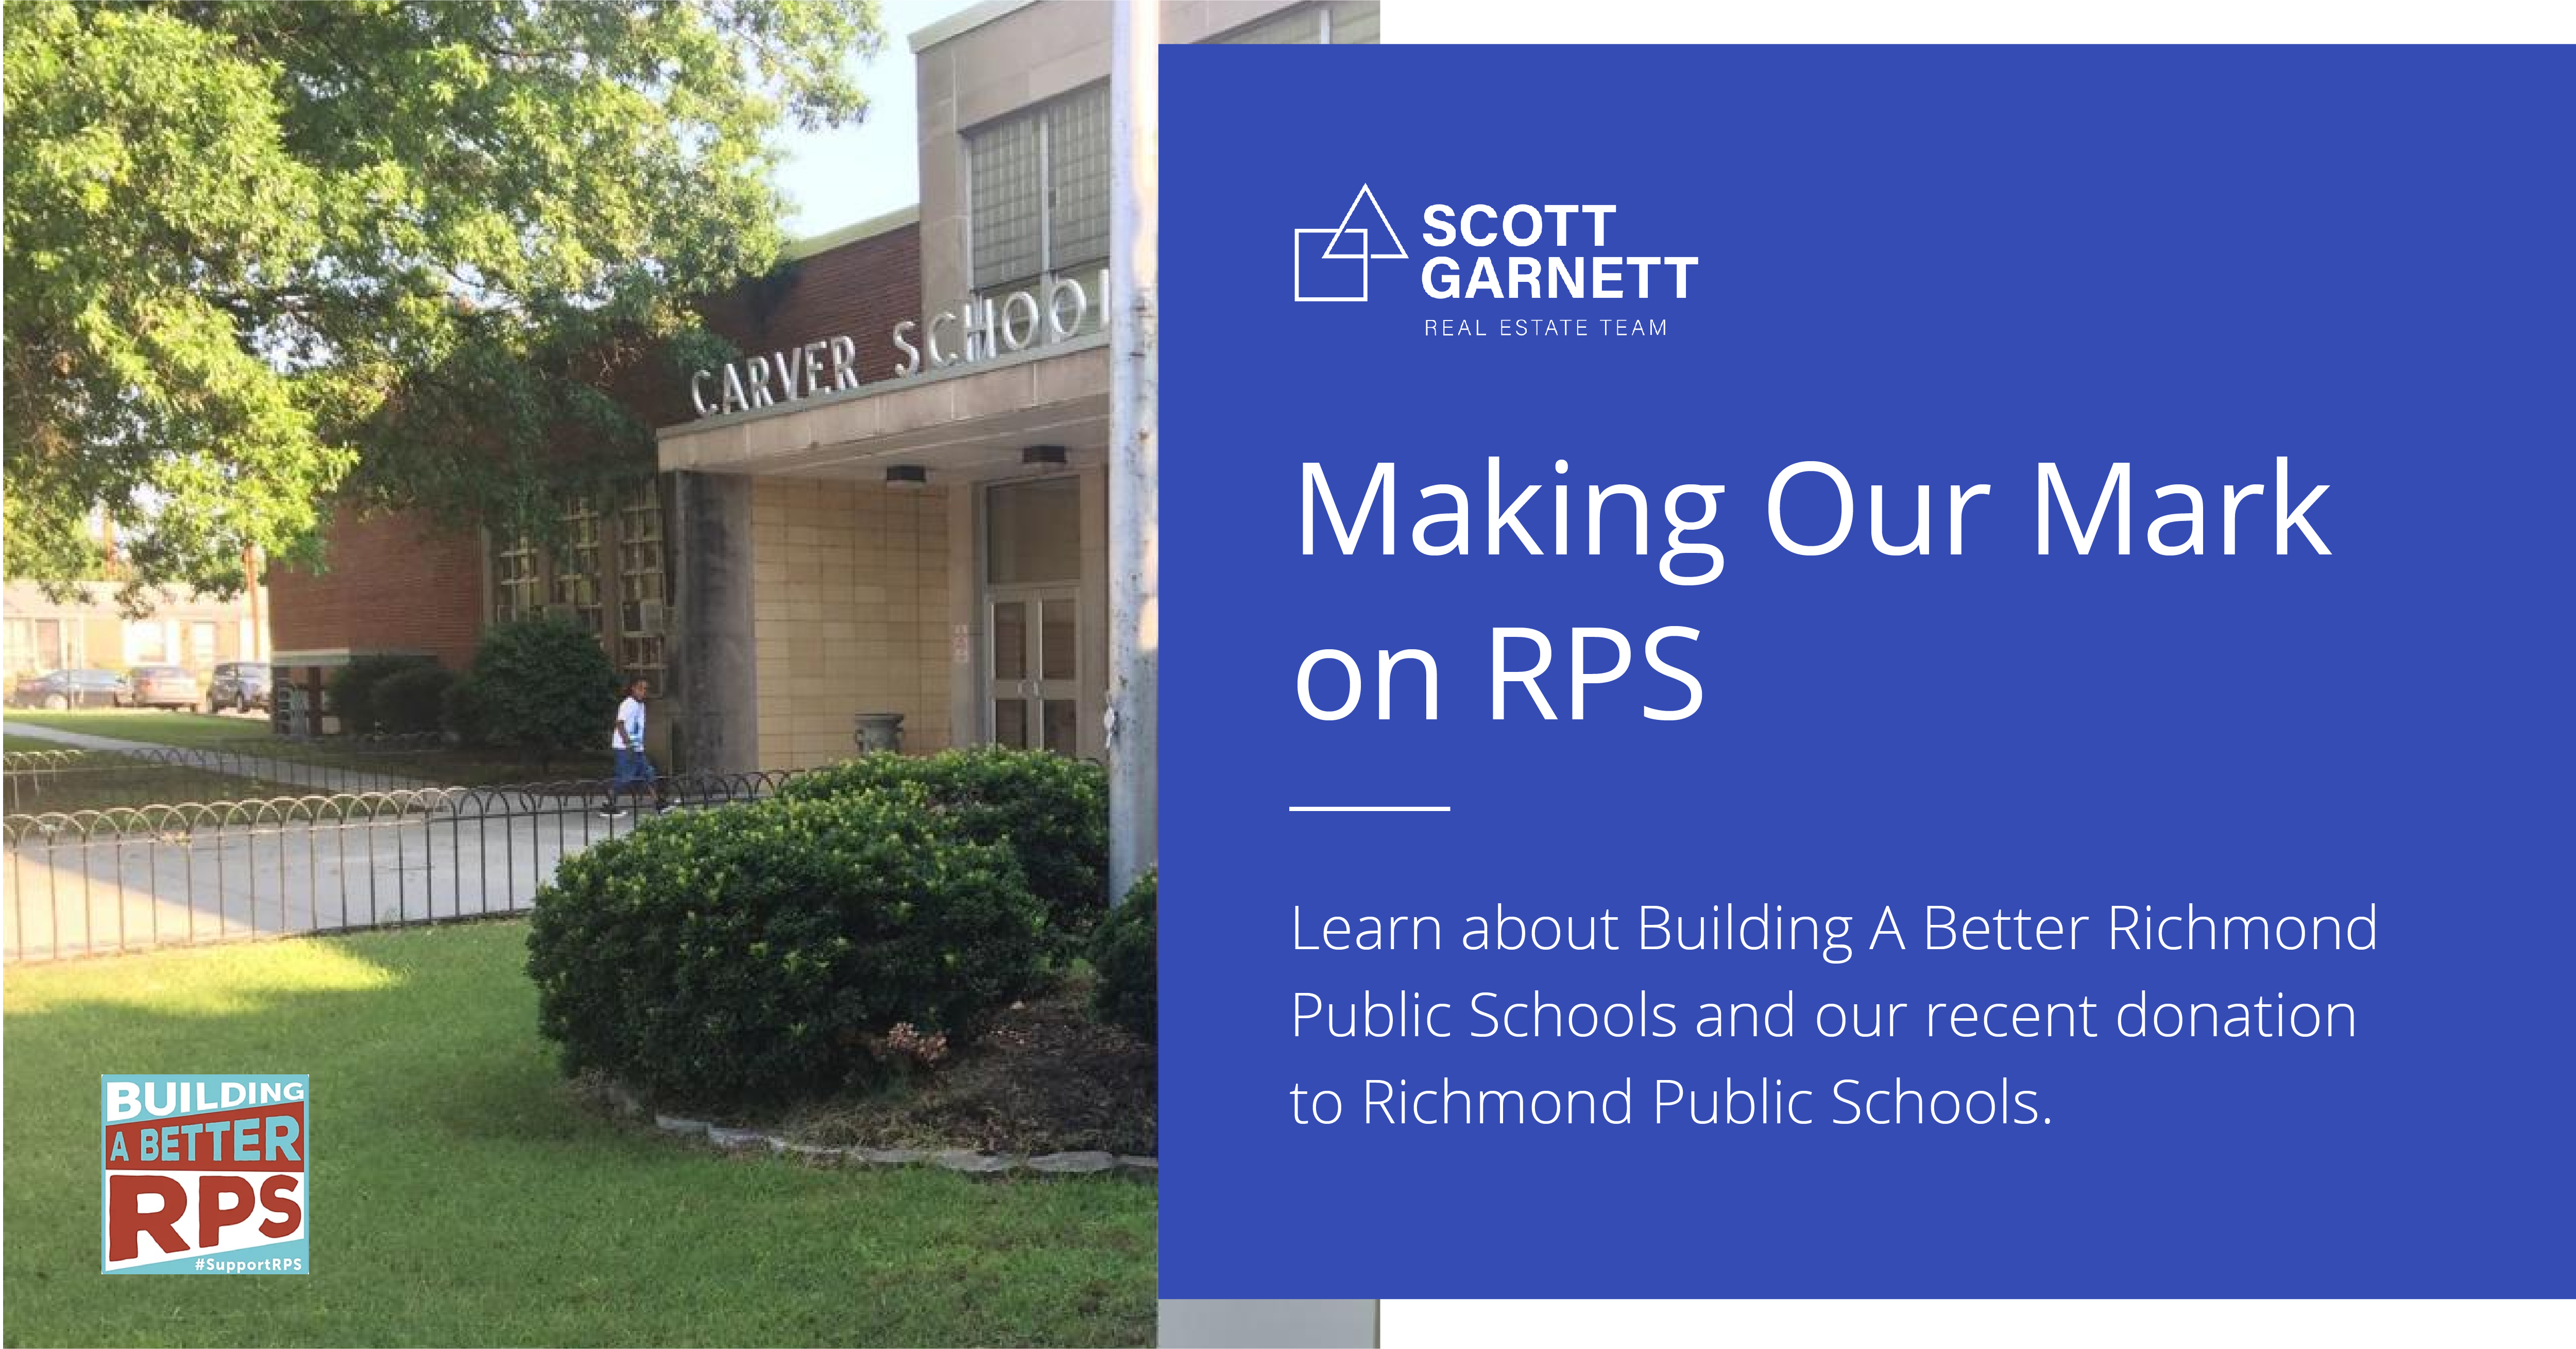 Determined to Building A Better Richmond Public Schools